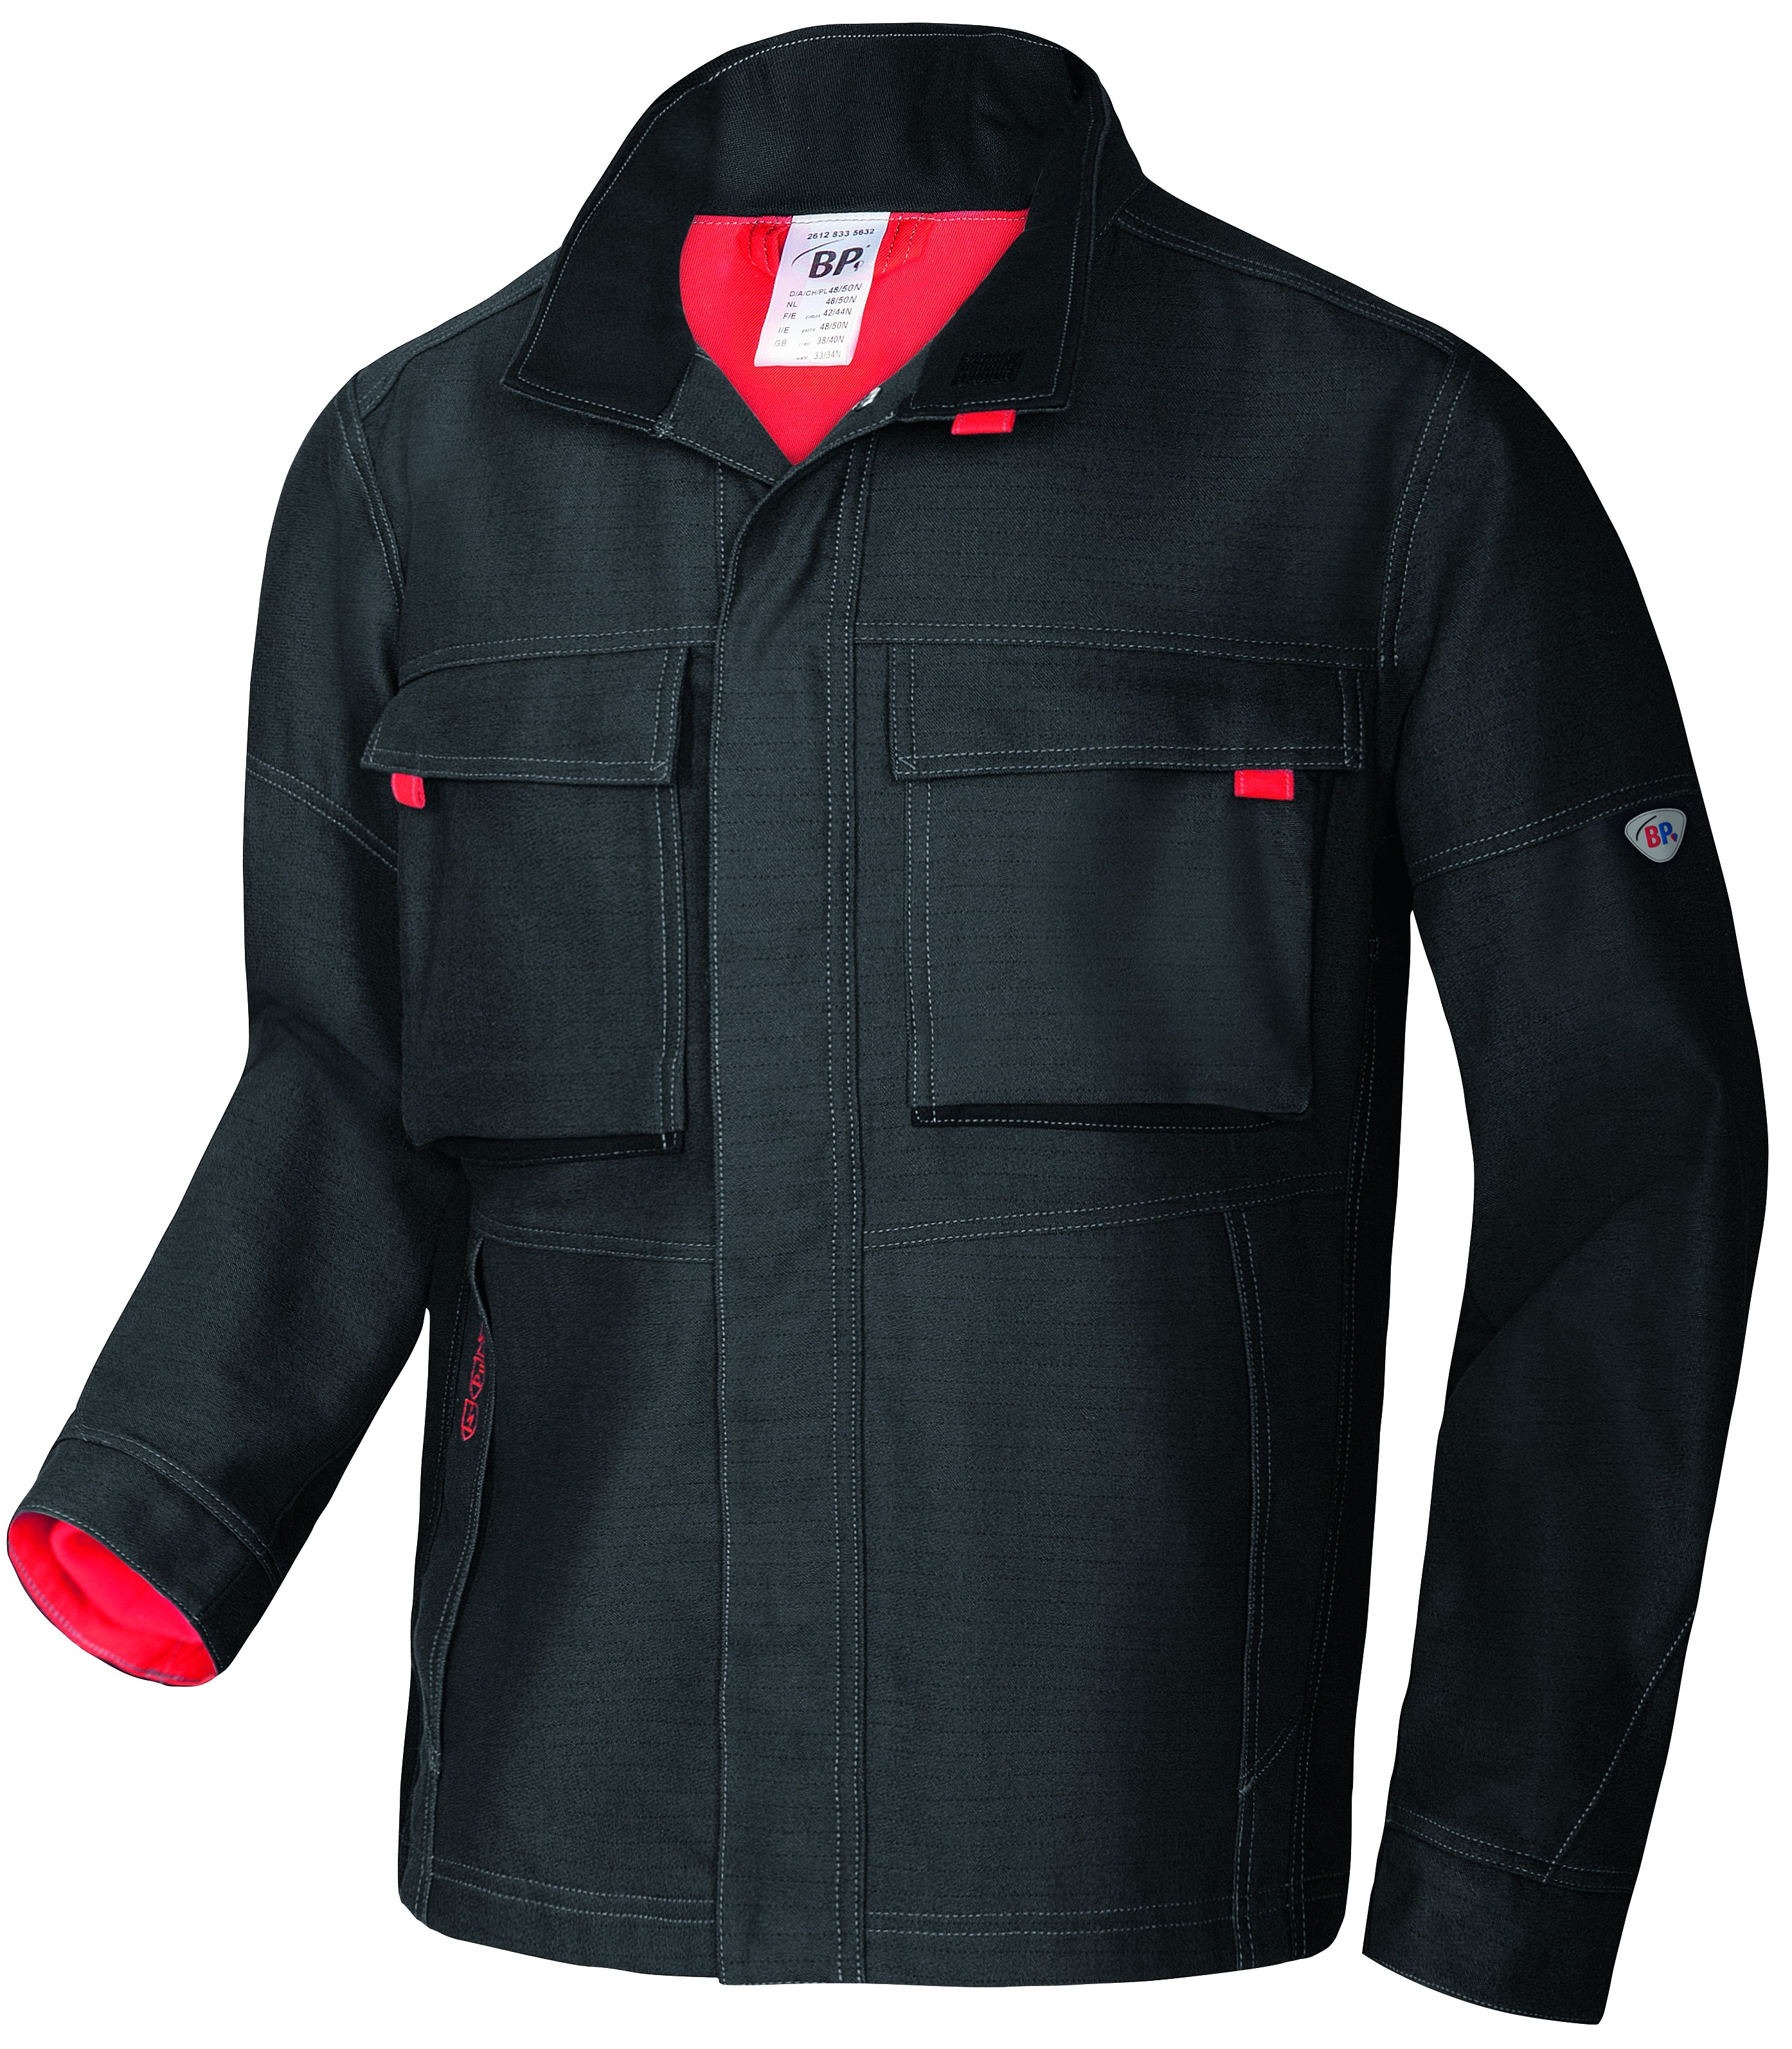 BP Arbeitsjacke Berufsjacke Schutzjacke Arbeitskleidung Berufskleidung Welders Comfort anthrazit schwarz ca 410g